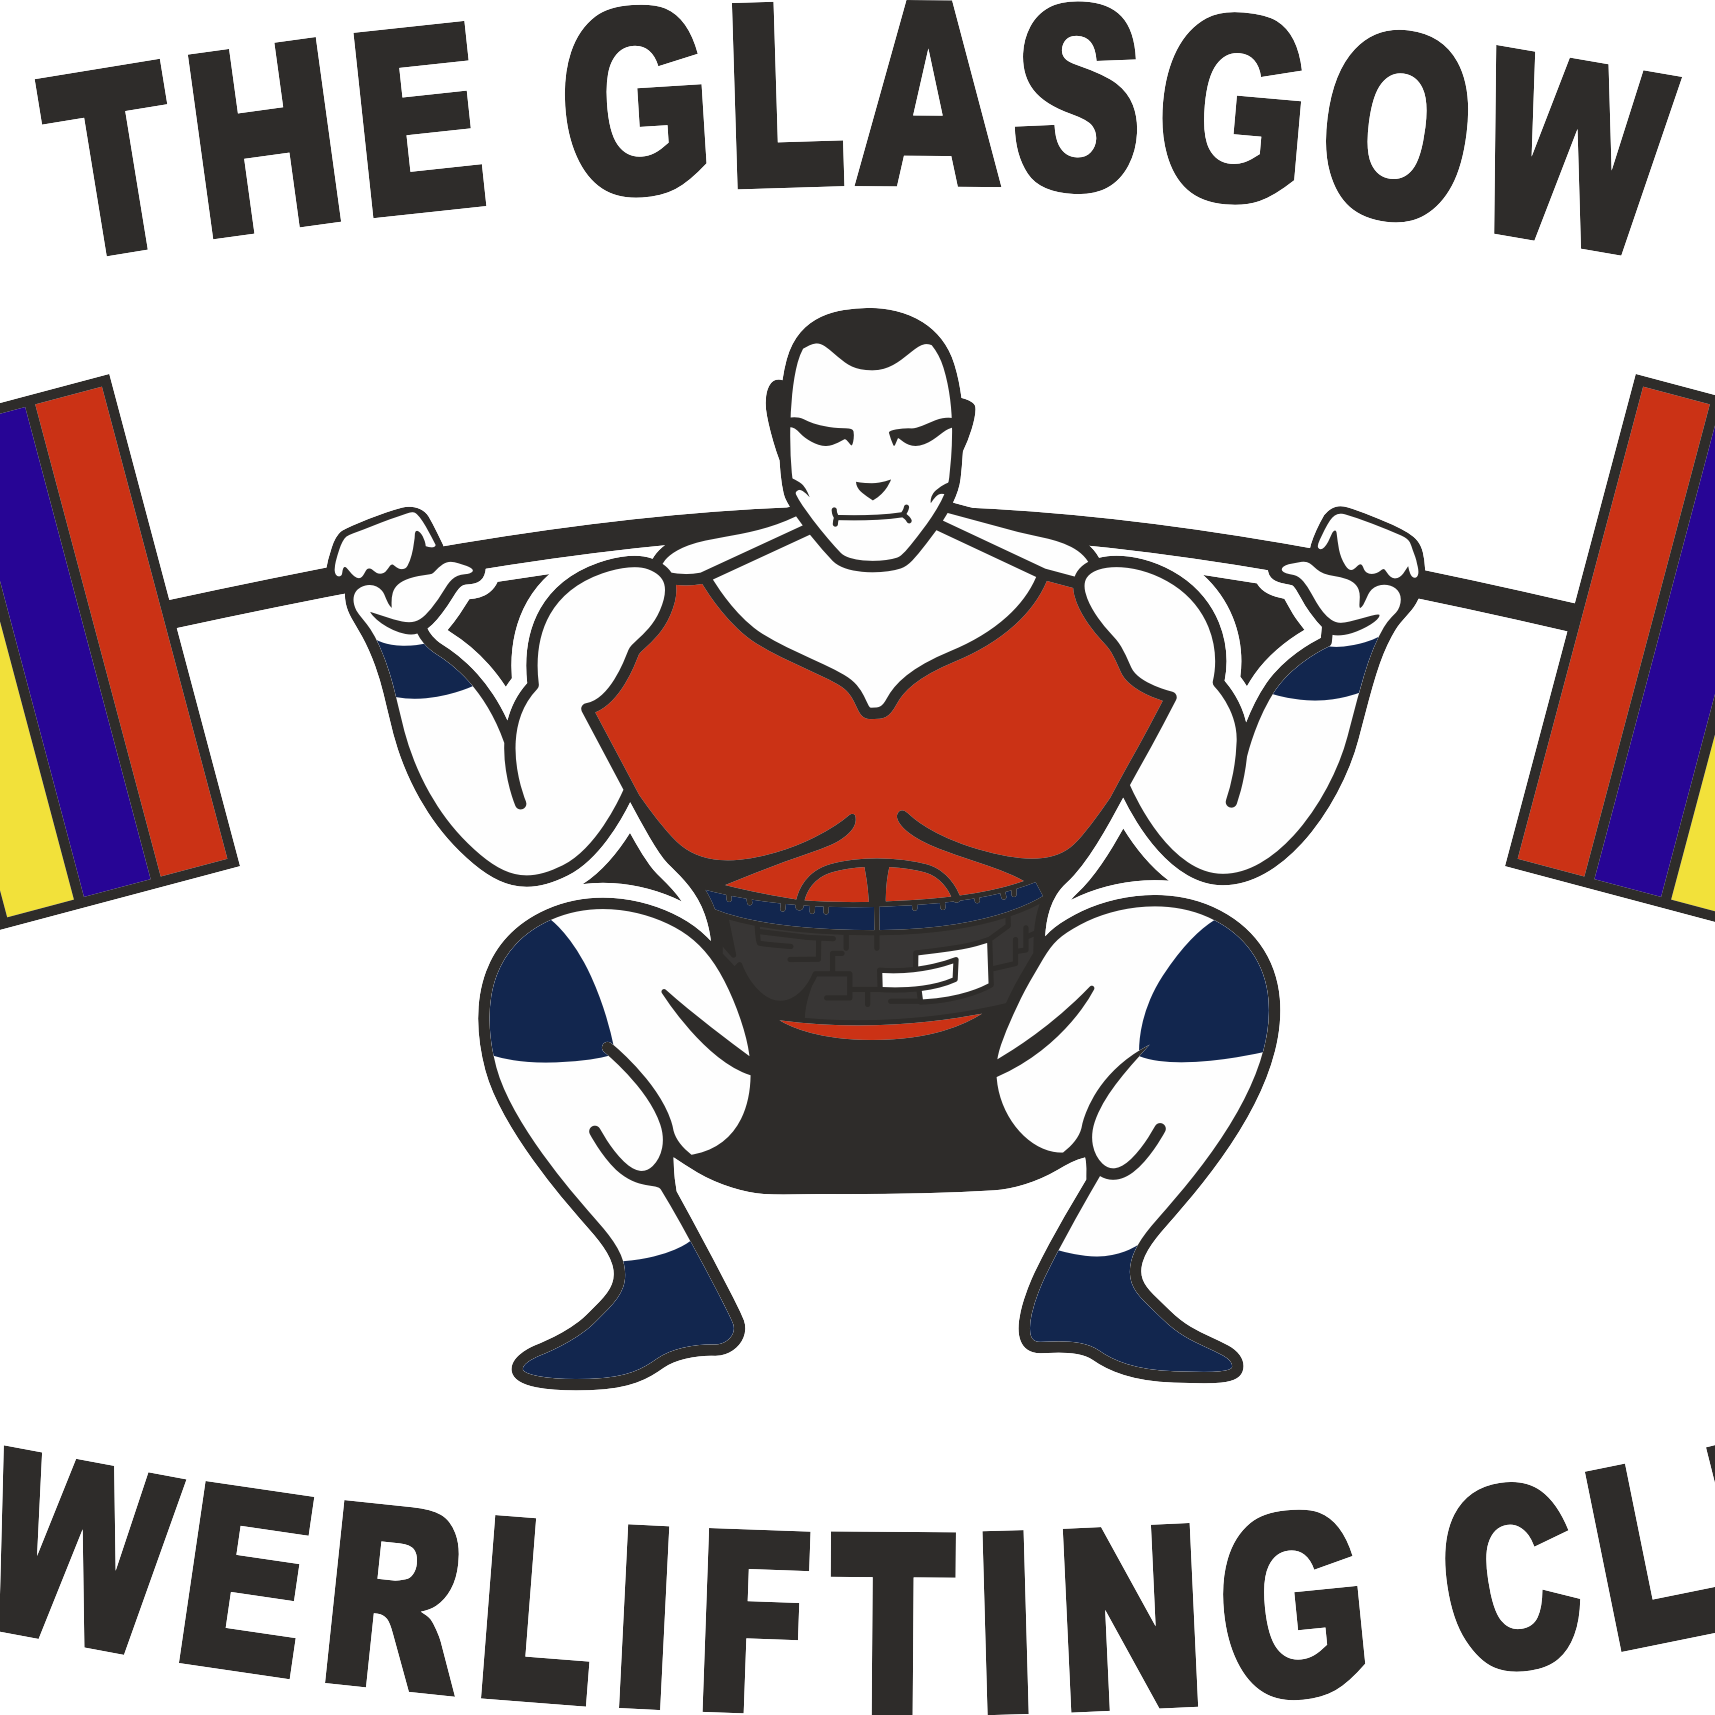 Glasgow Powerlifting